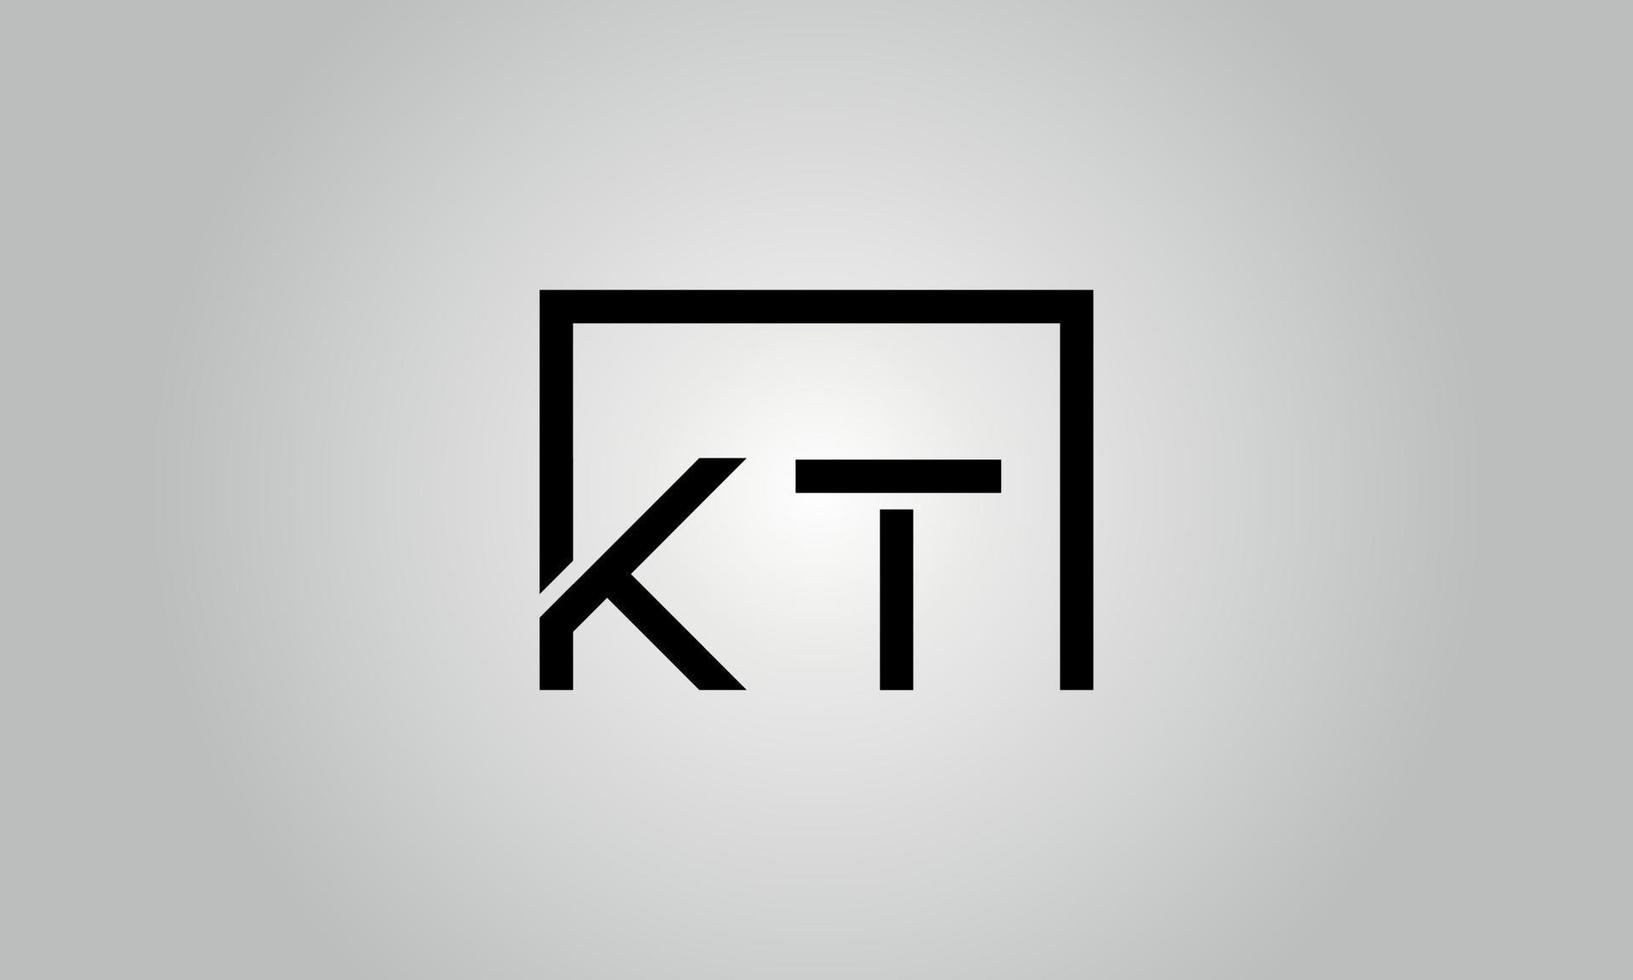 Letter KT logo design. KT logo with square shape in black colors vector free vector template.